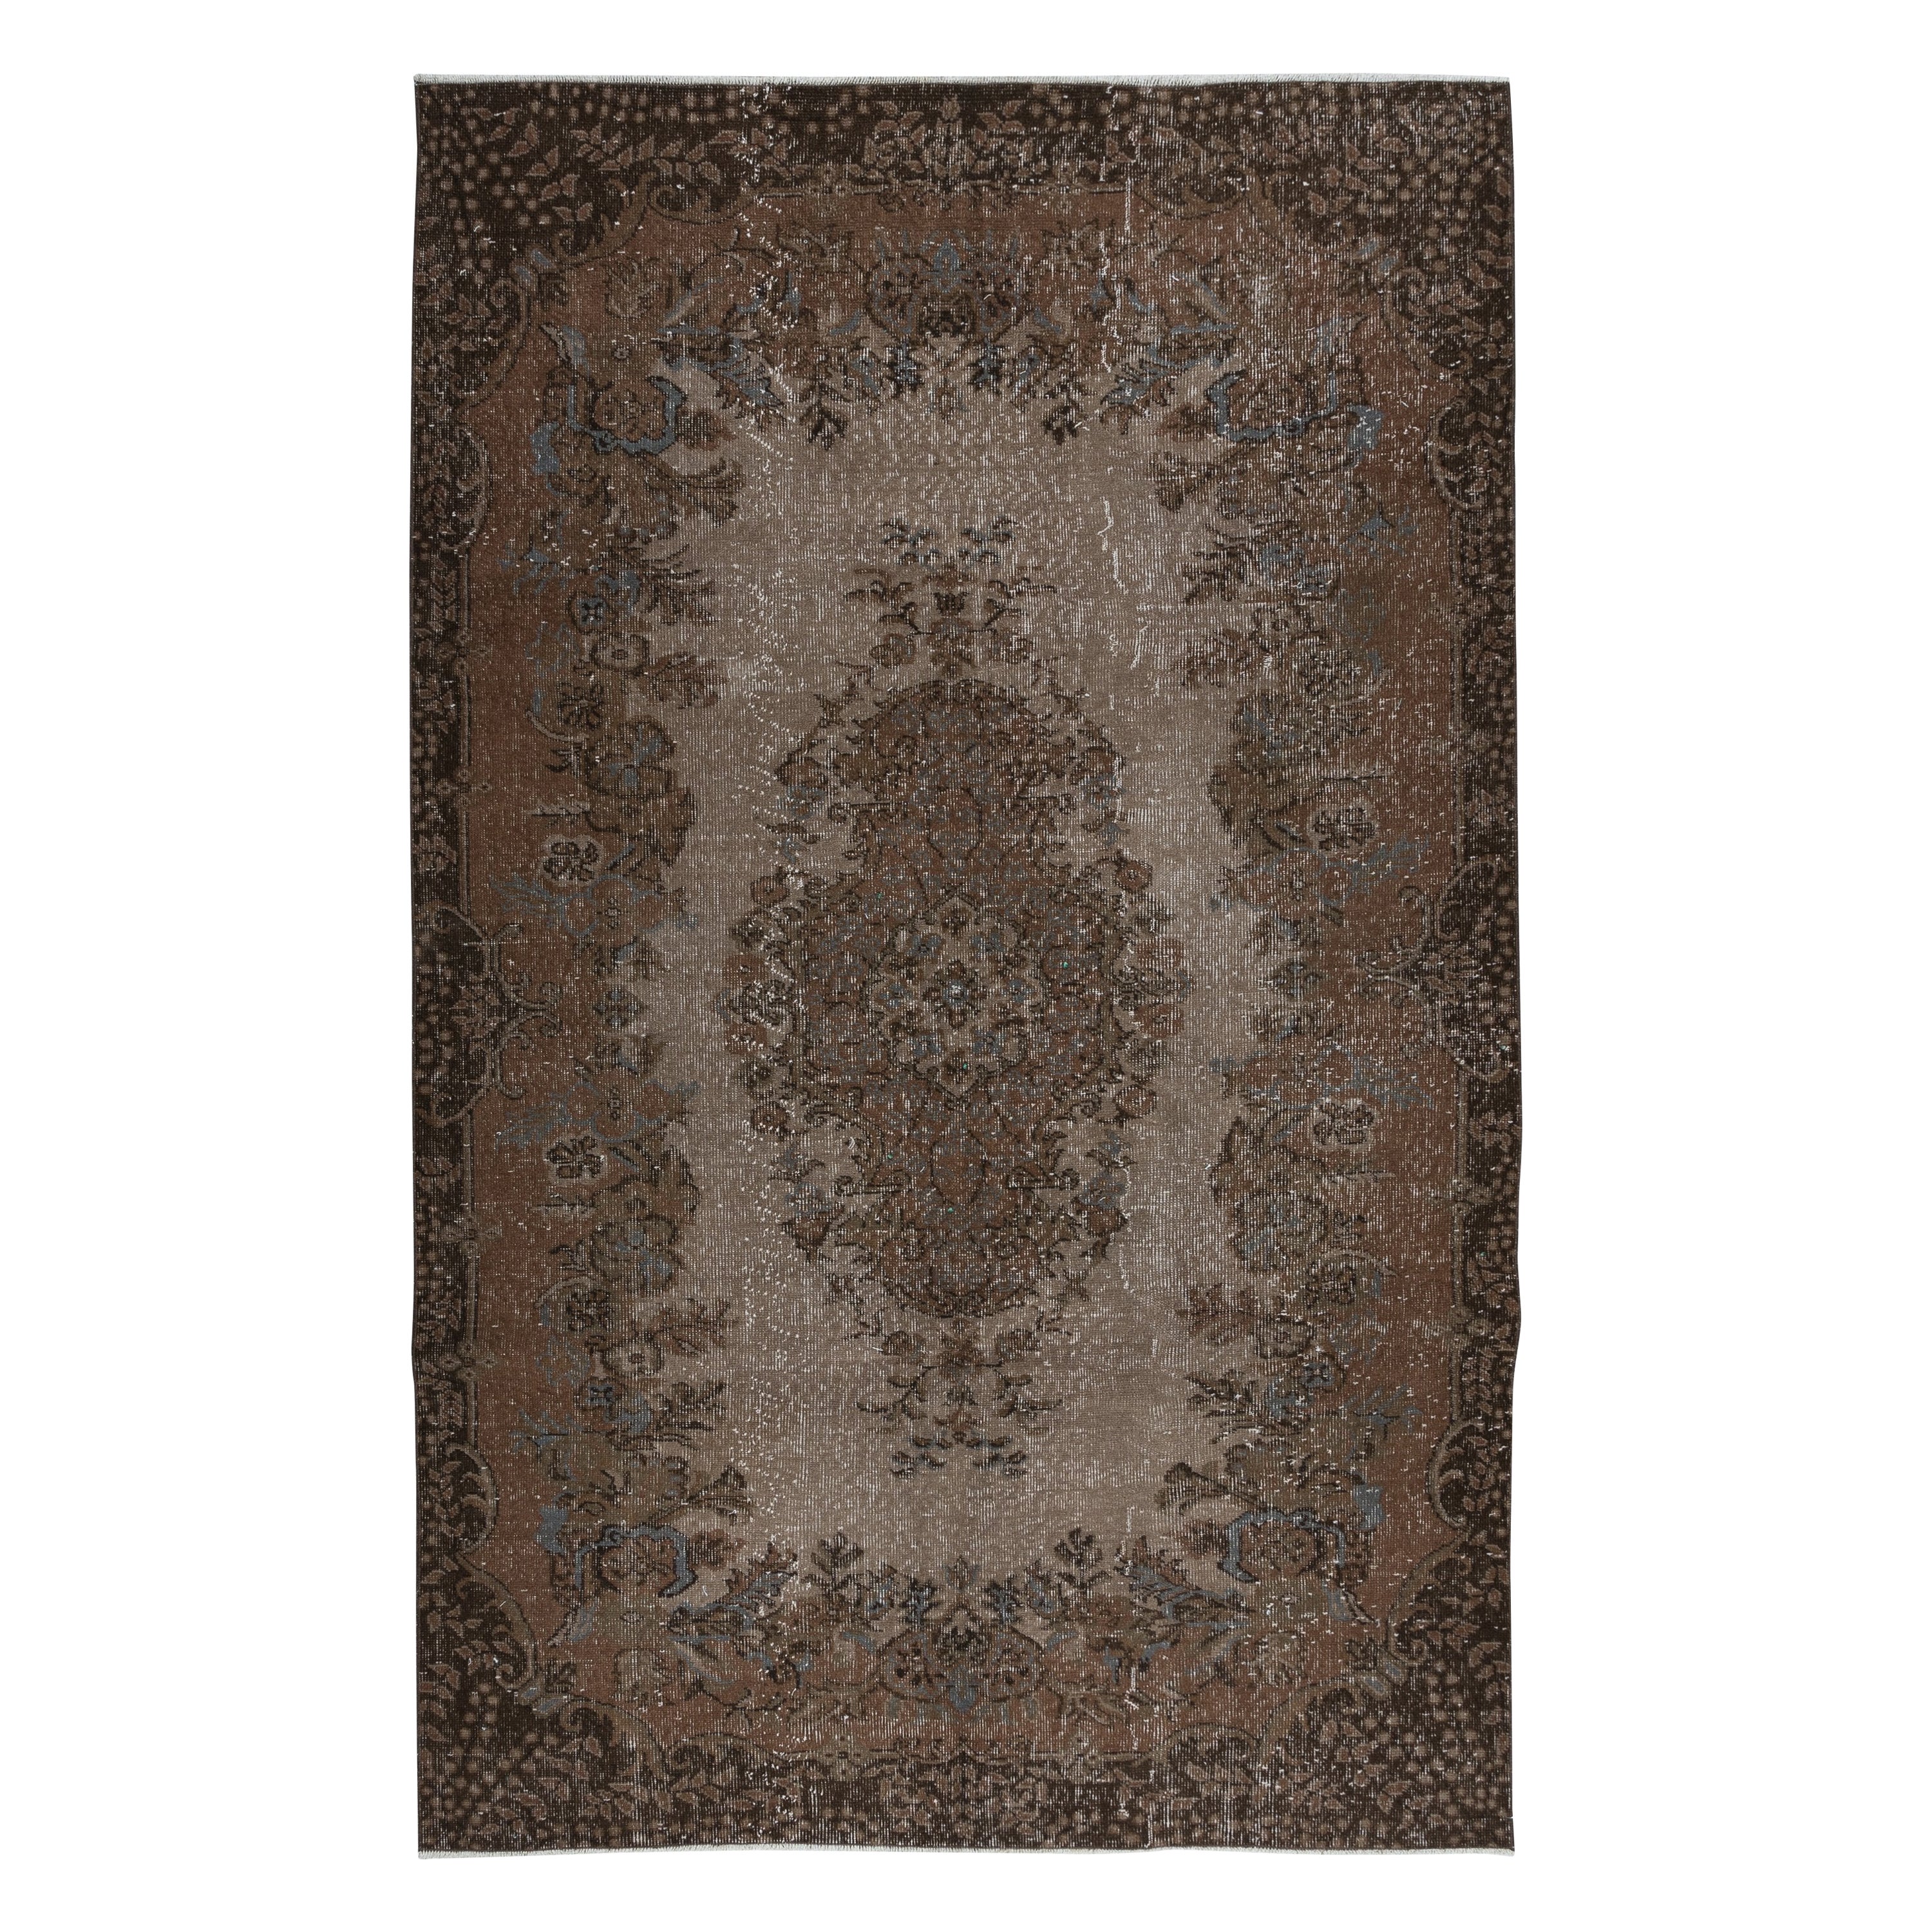 5.4x8.7 Ft Rustikaler Türkischer Flächenteppich, Braun Handgefertigt Contemporary Carpet